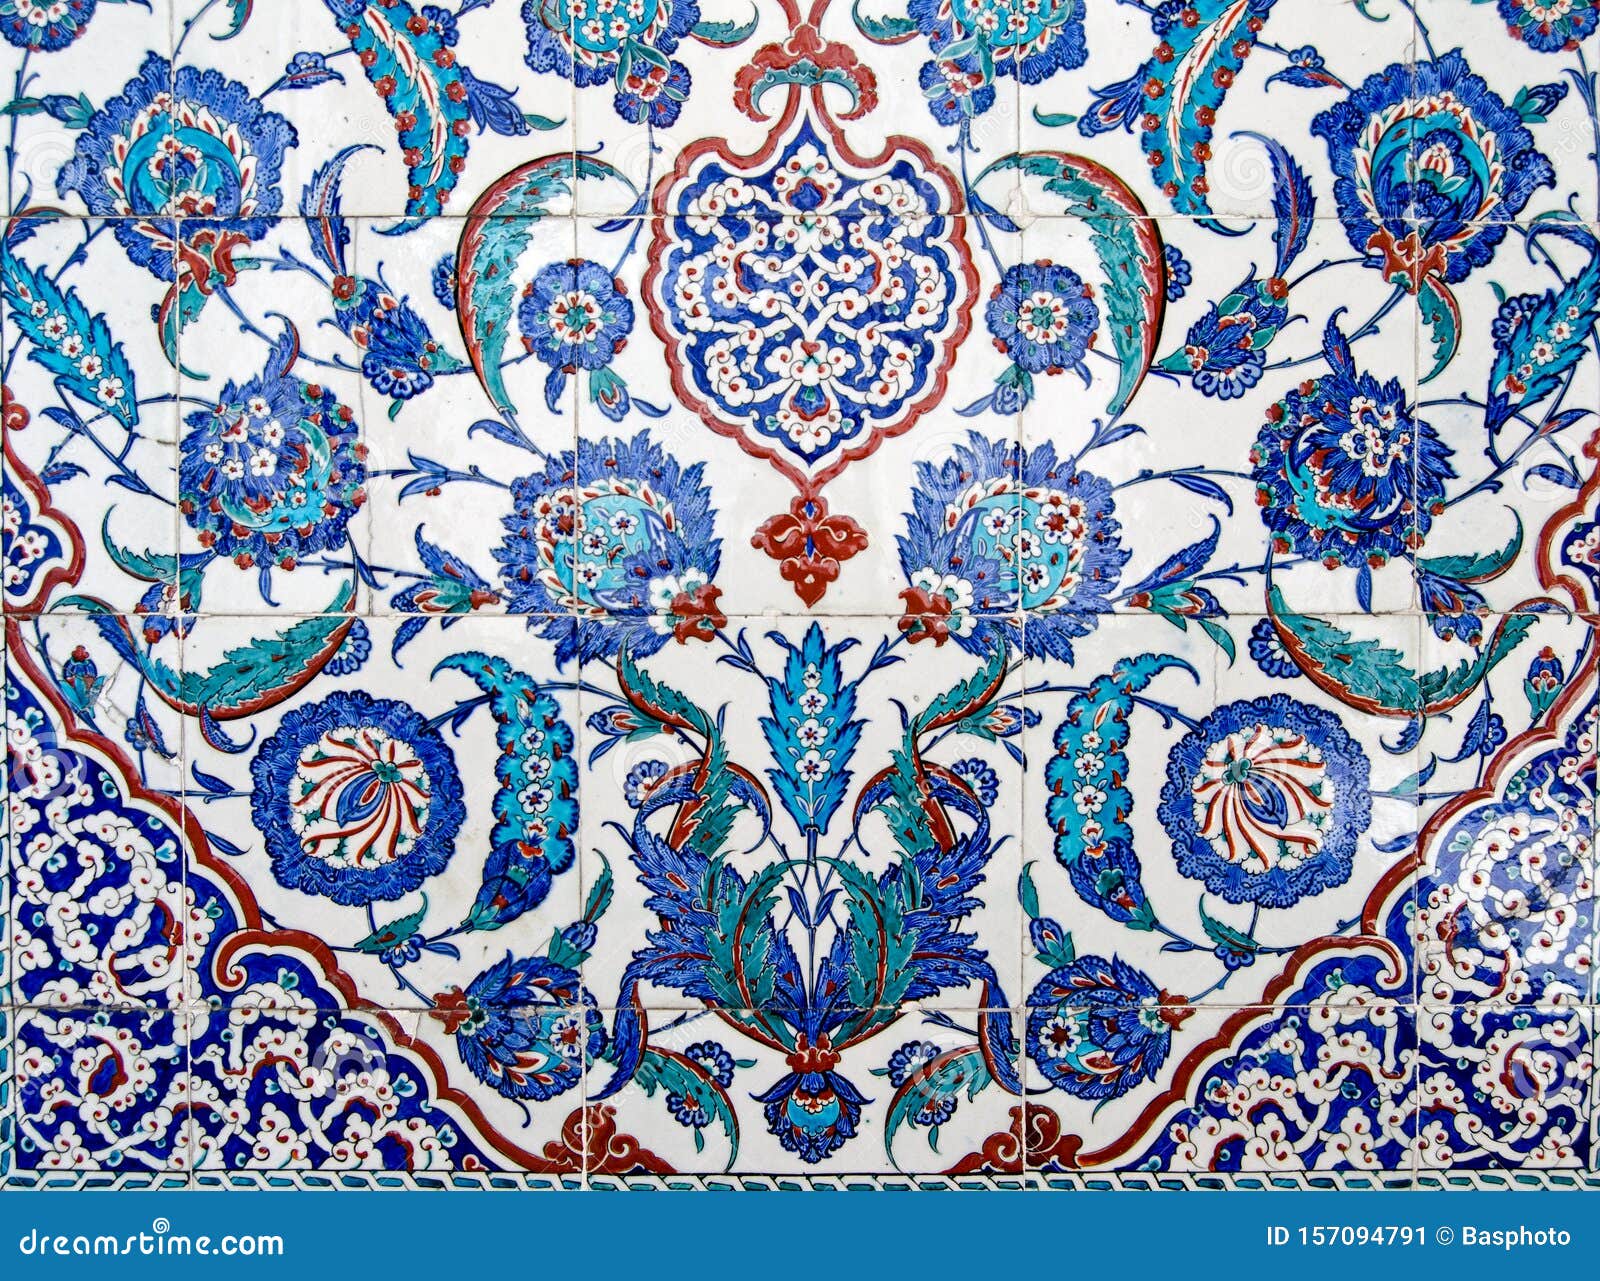 beautiful iznik tiles on tomb of sultan murad iii, istanbul